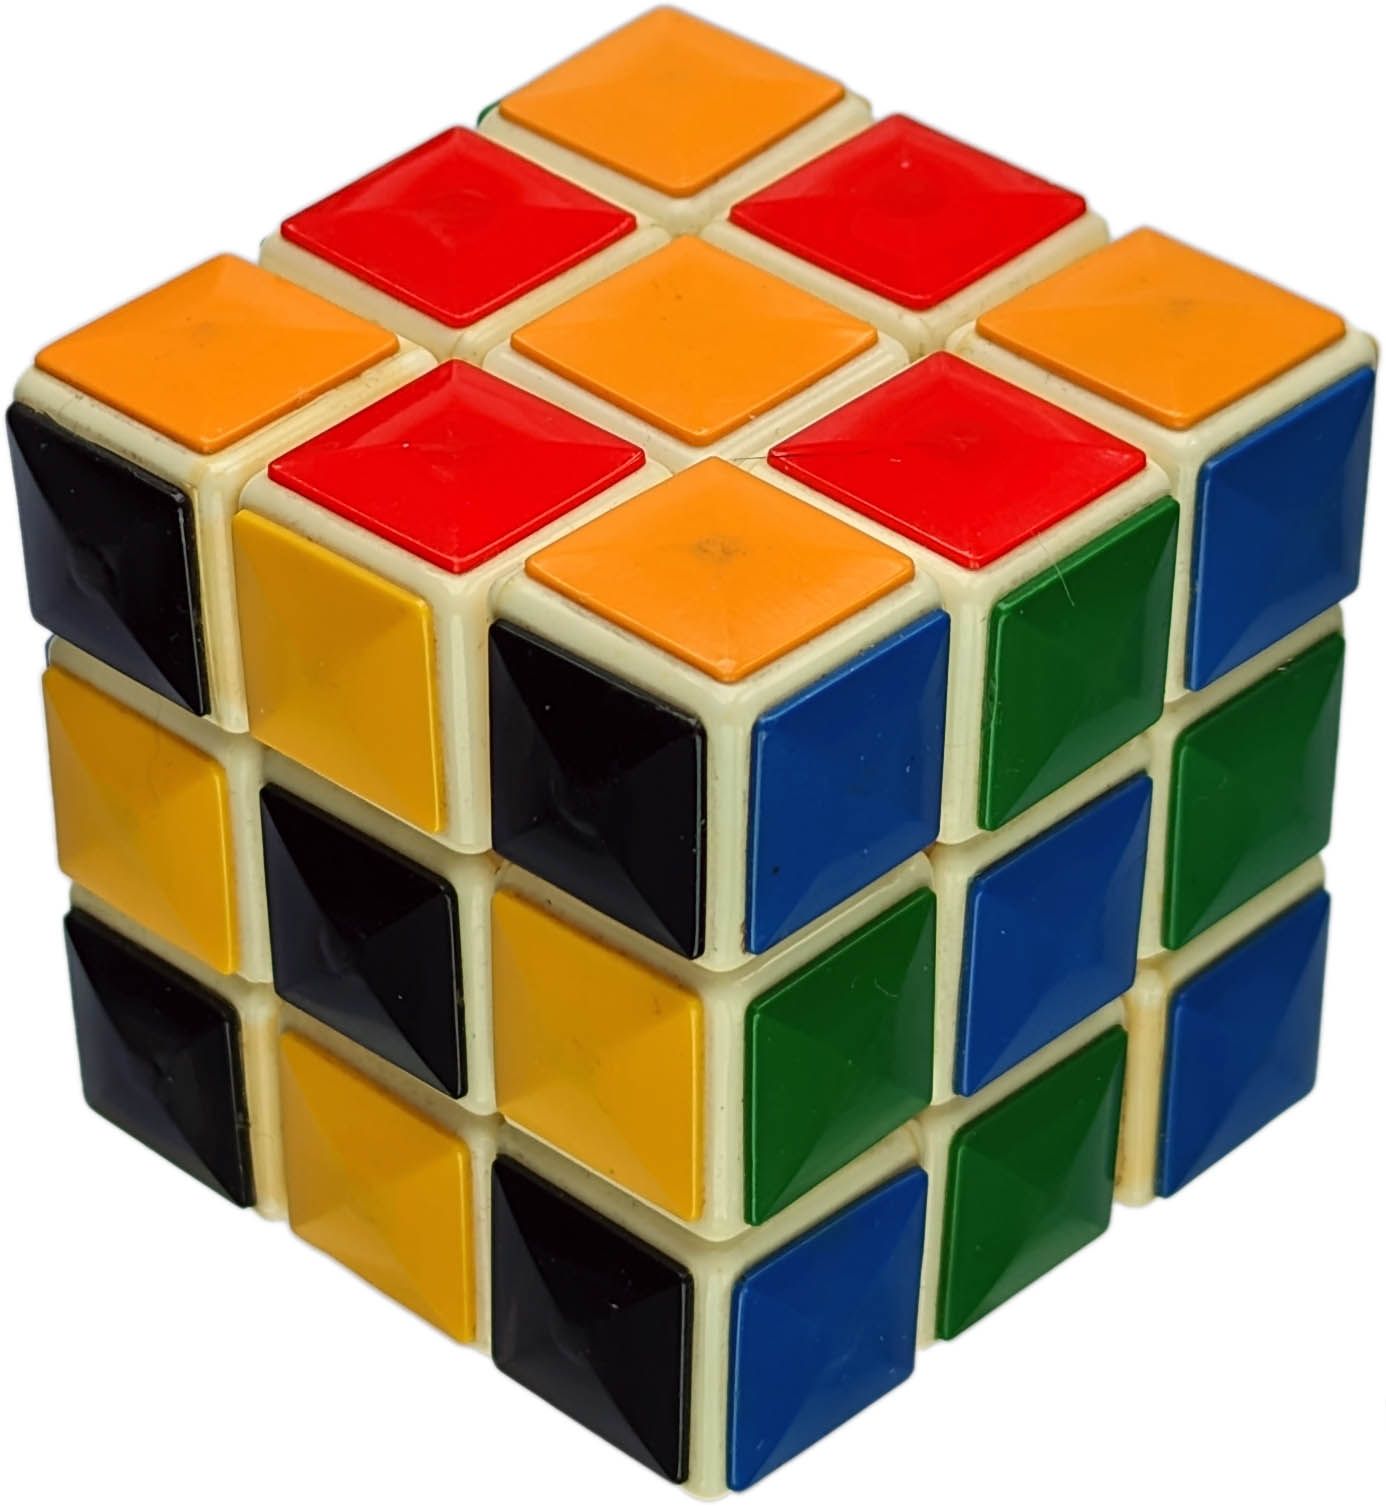 Советский кубик Рубика. Старые советские кубики деревянные. Советские кубики конструктоп. Елочная игрушка куб СССР.